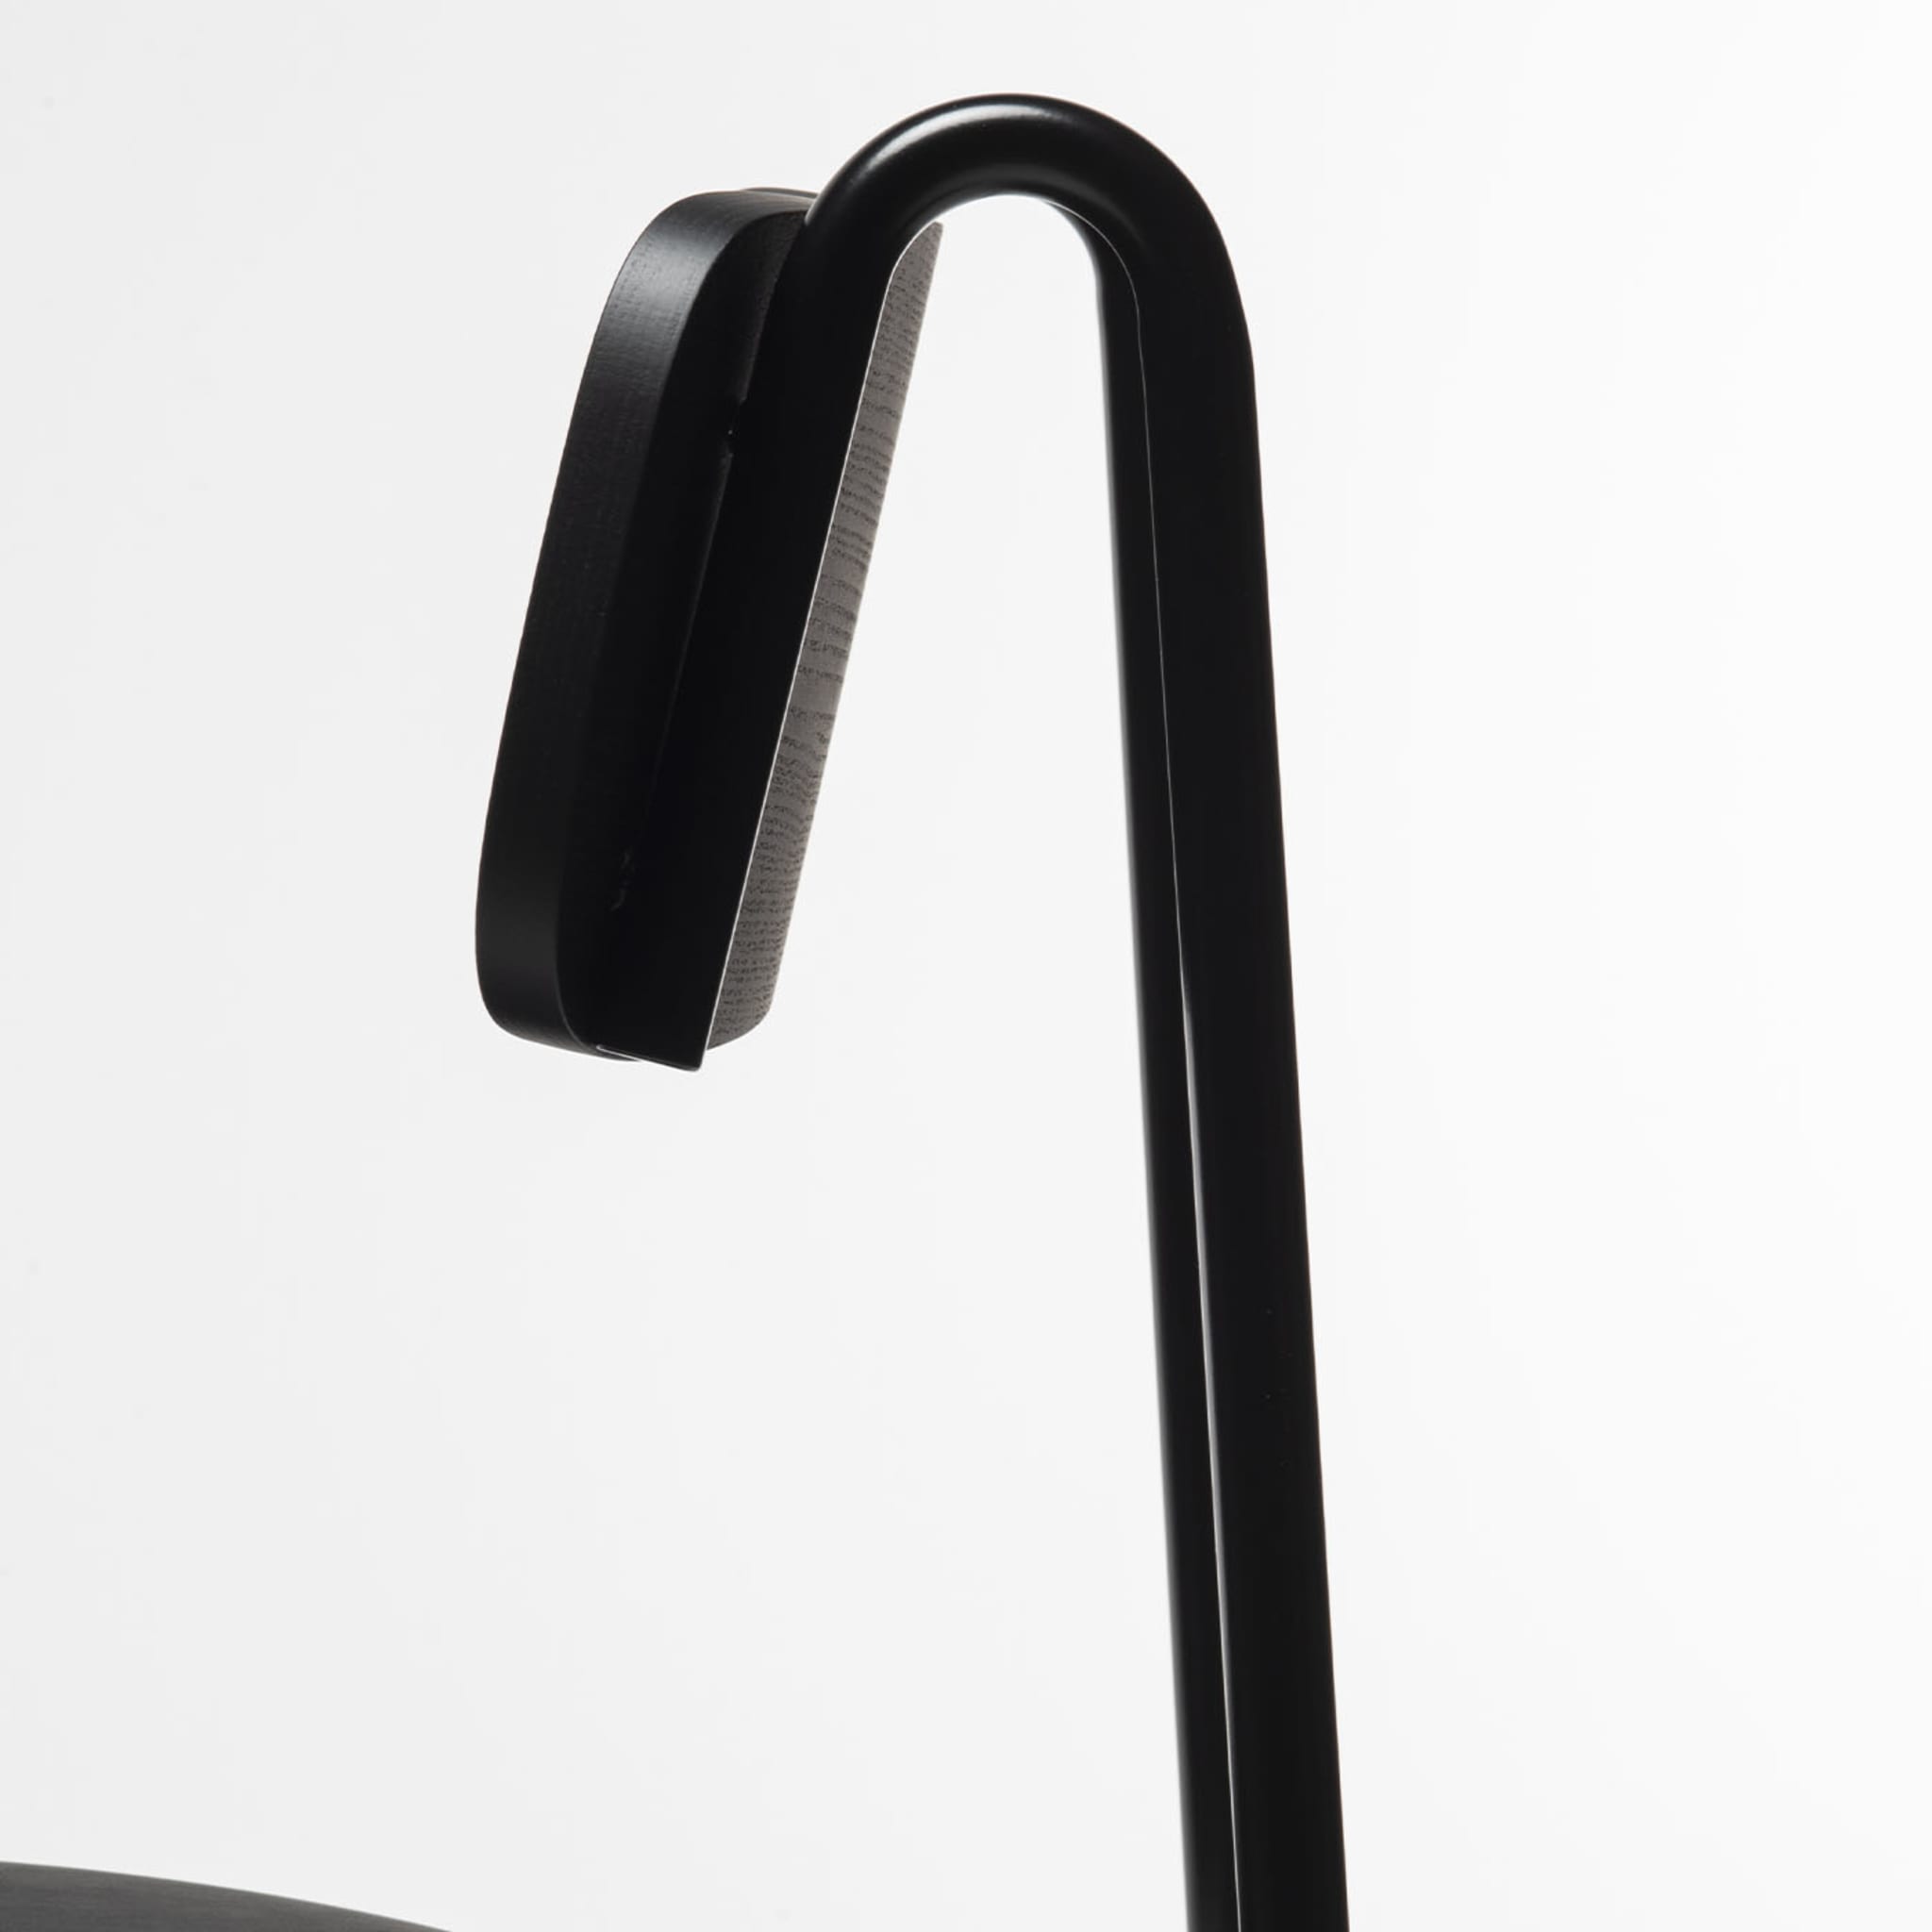 Lena S Black Chair By Designerd - Alternative view 1